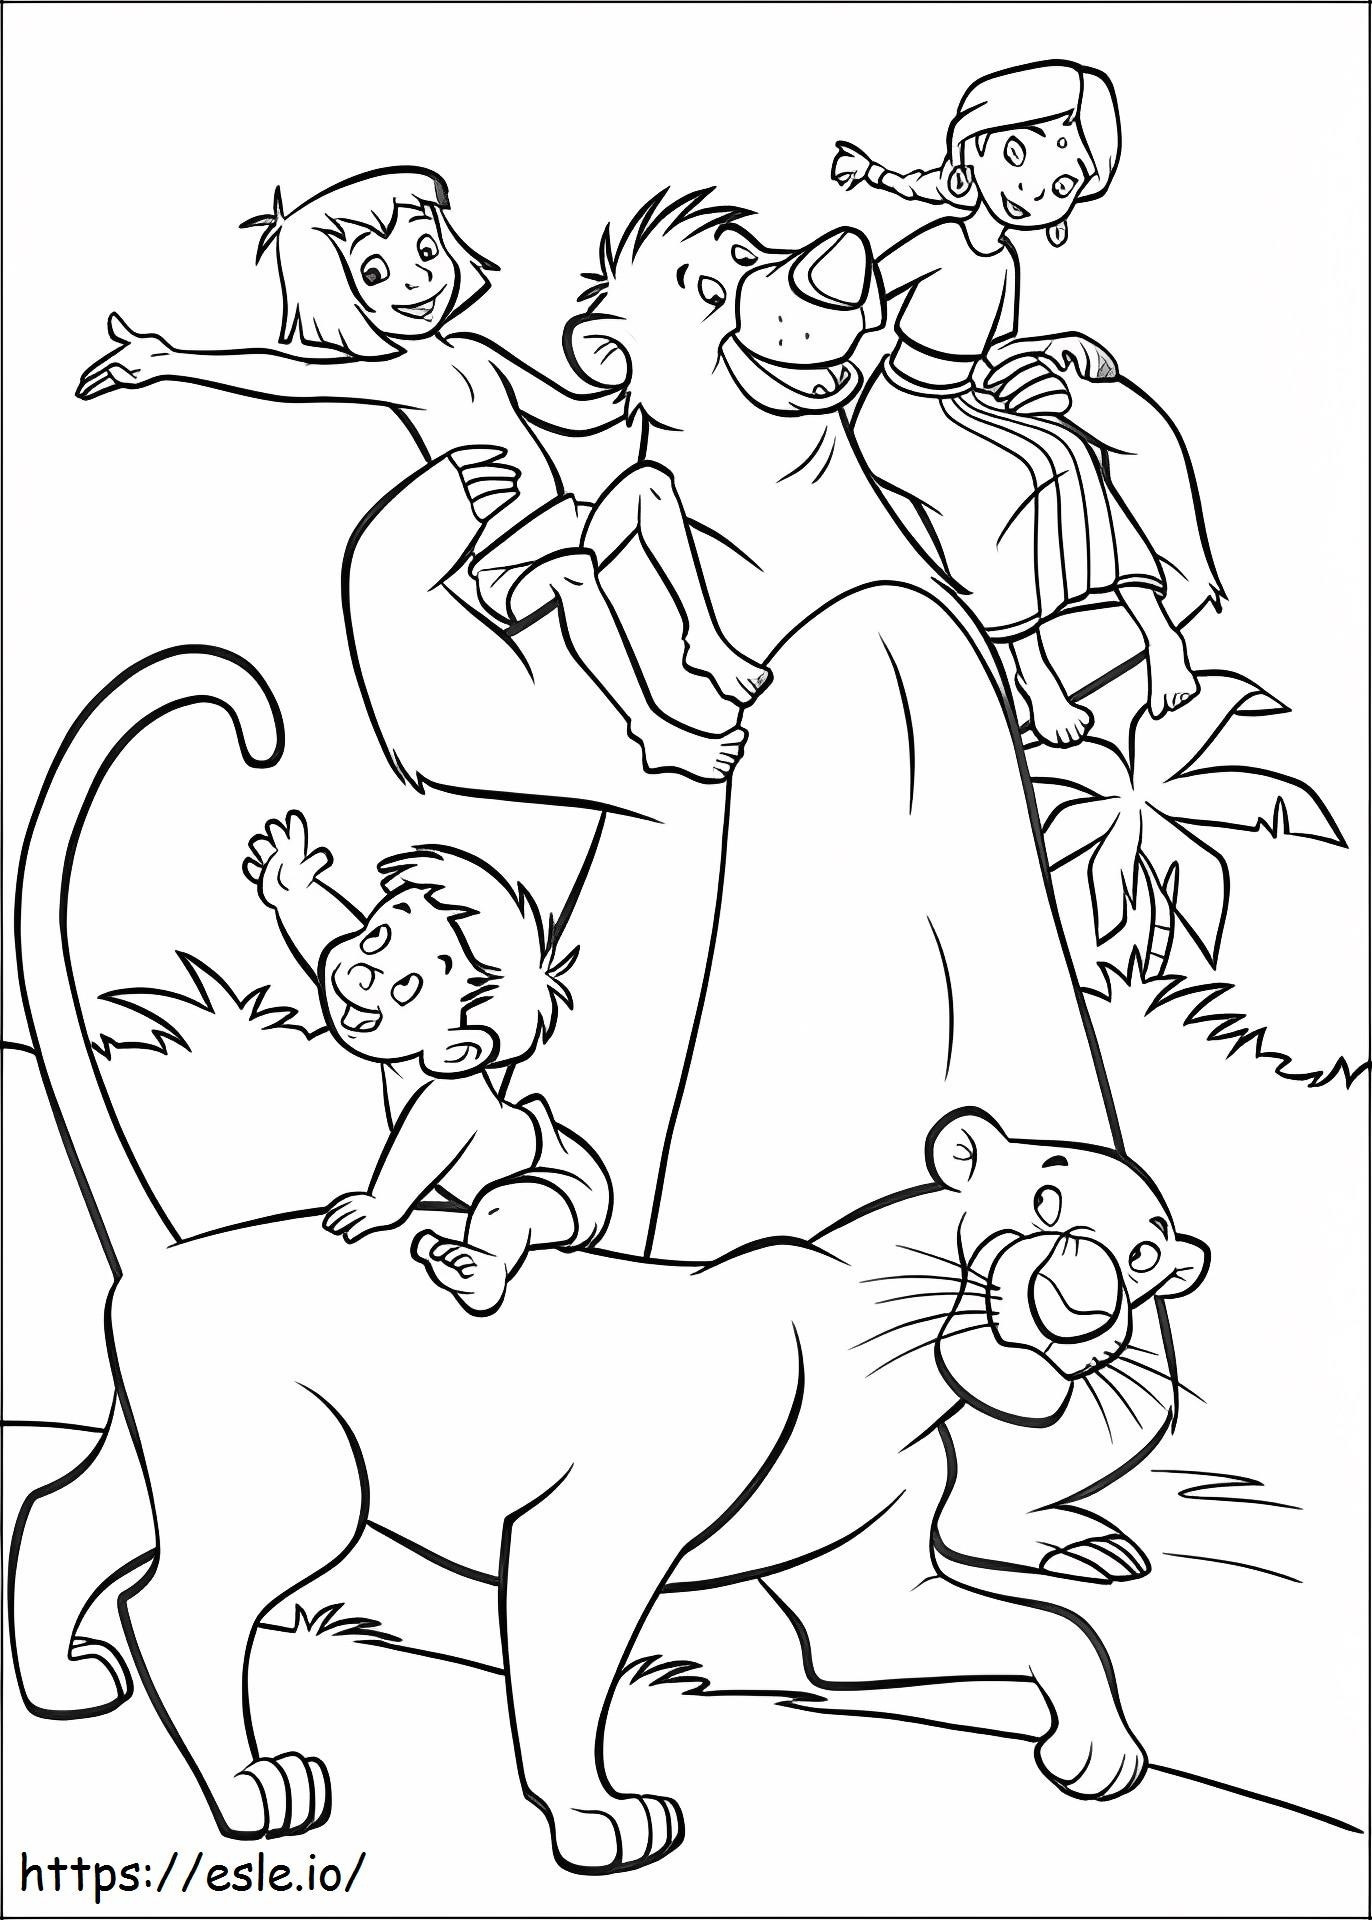 La Familia Índia Mowgli Baloo e Bagheera para colorir